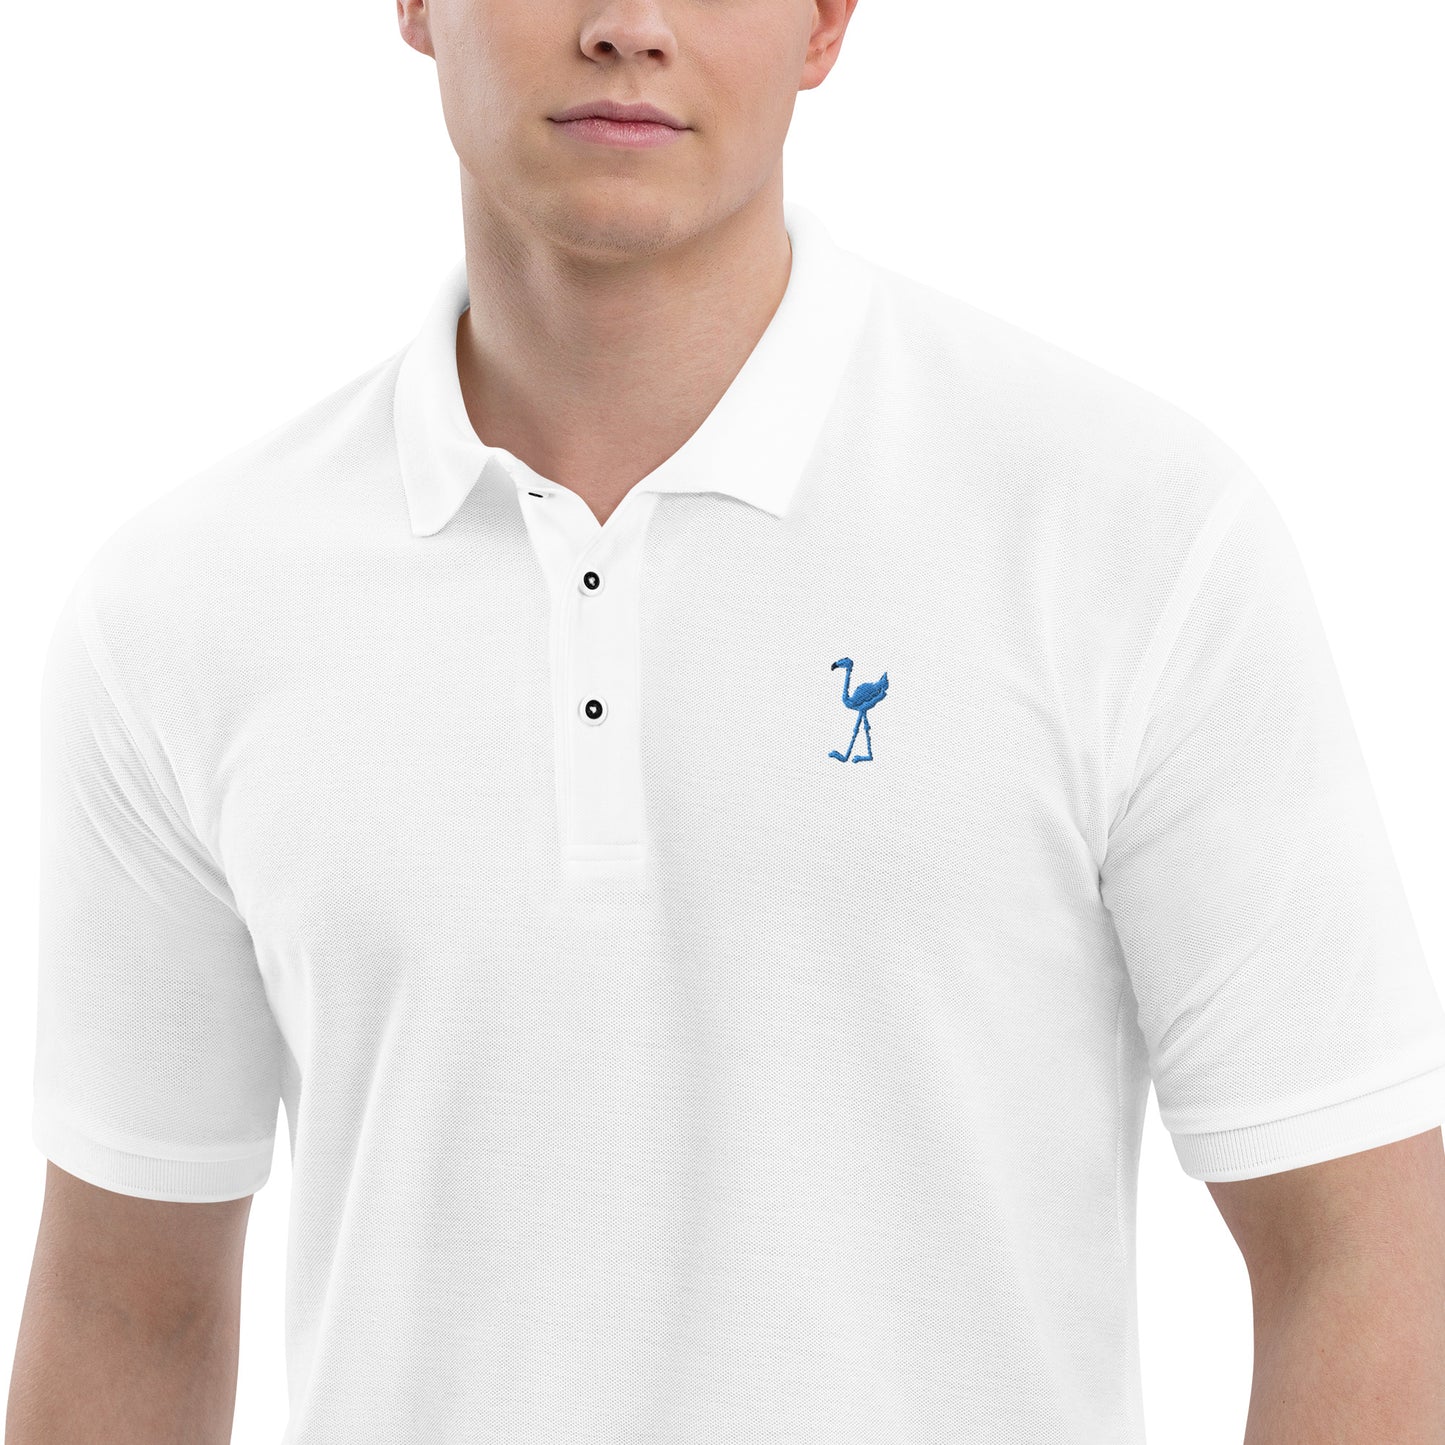 Lu Lu The Blue Flamingo's Original Premium Embroidery Polo Shirt for Men - The flamingo polo shirt that started it all!!!